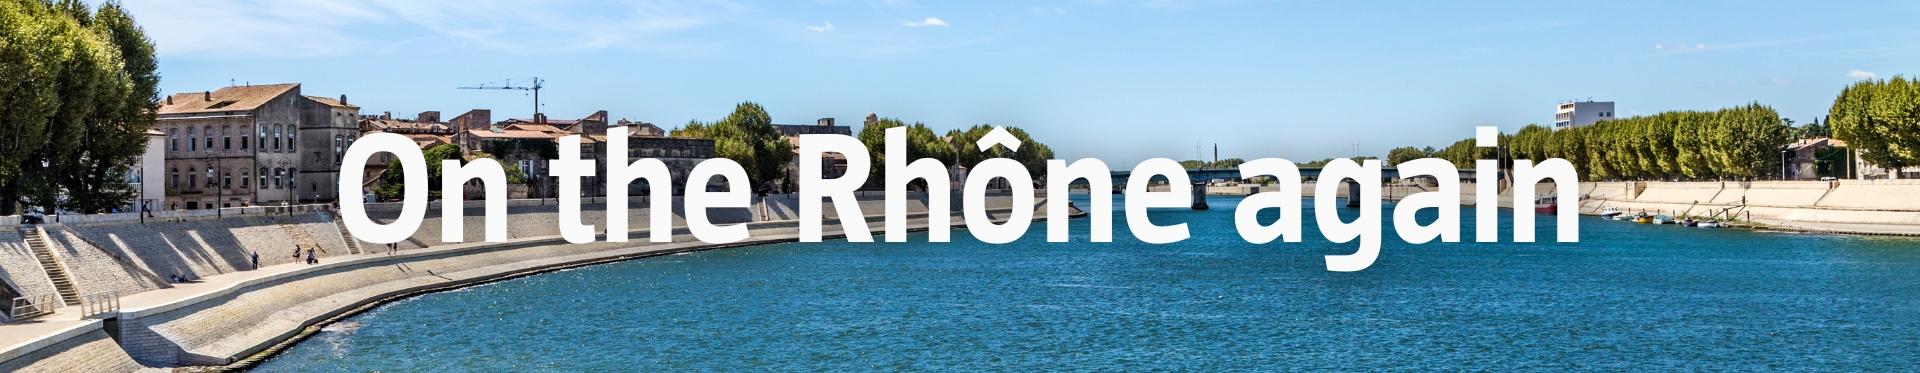 Photo du Rhône avec le titre "On the Rhône again"